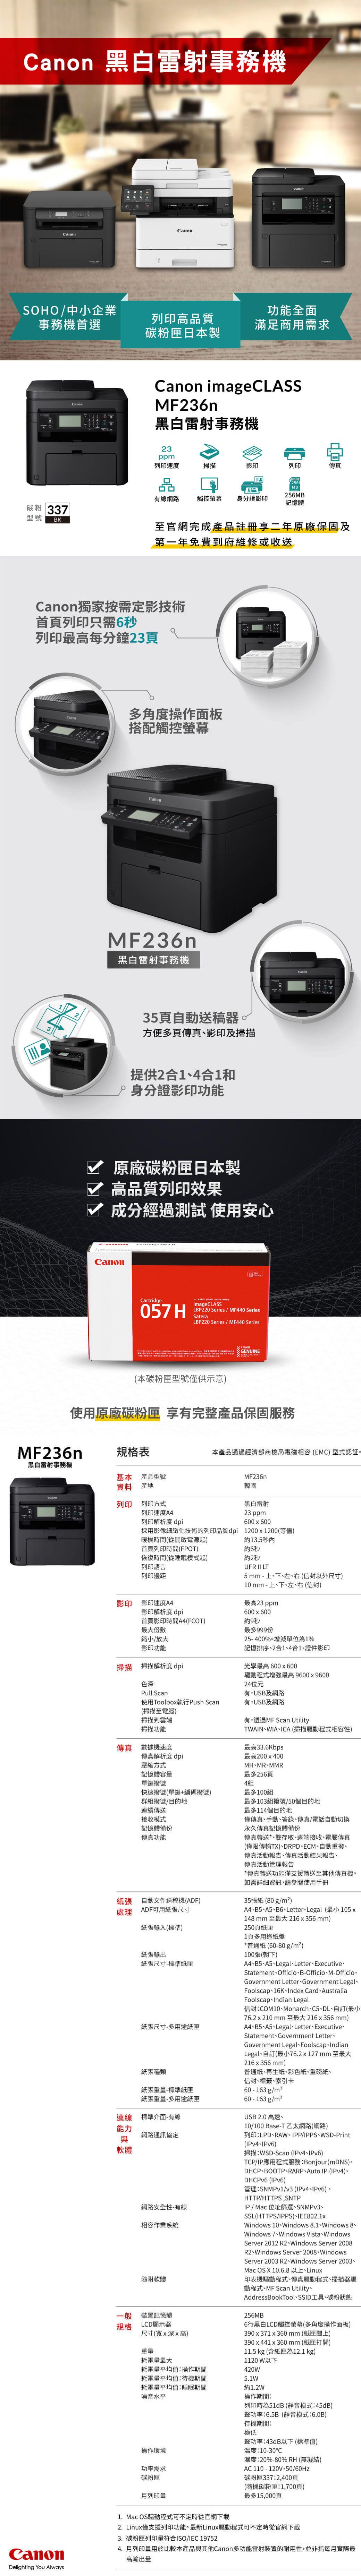 Canon MF236n小型影印事務機(公司貨) - PChome 24h購物